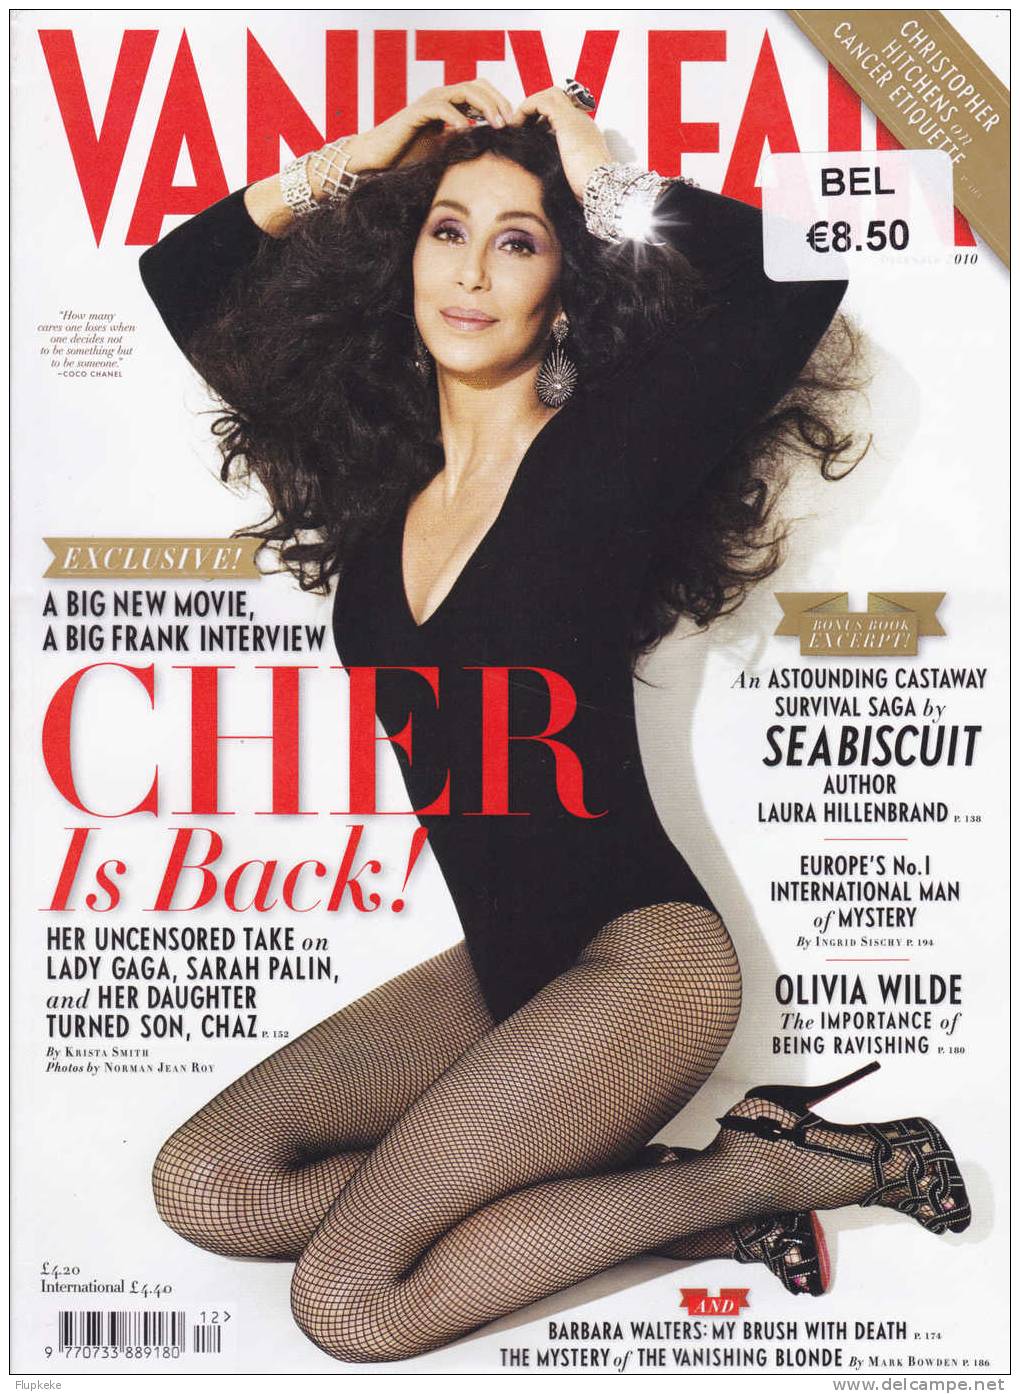 Vanity Fair 604 December 2010 Cher Is Back! - Unterhaltung